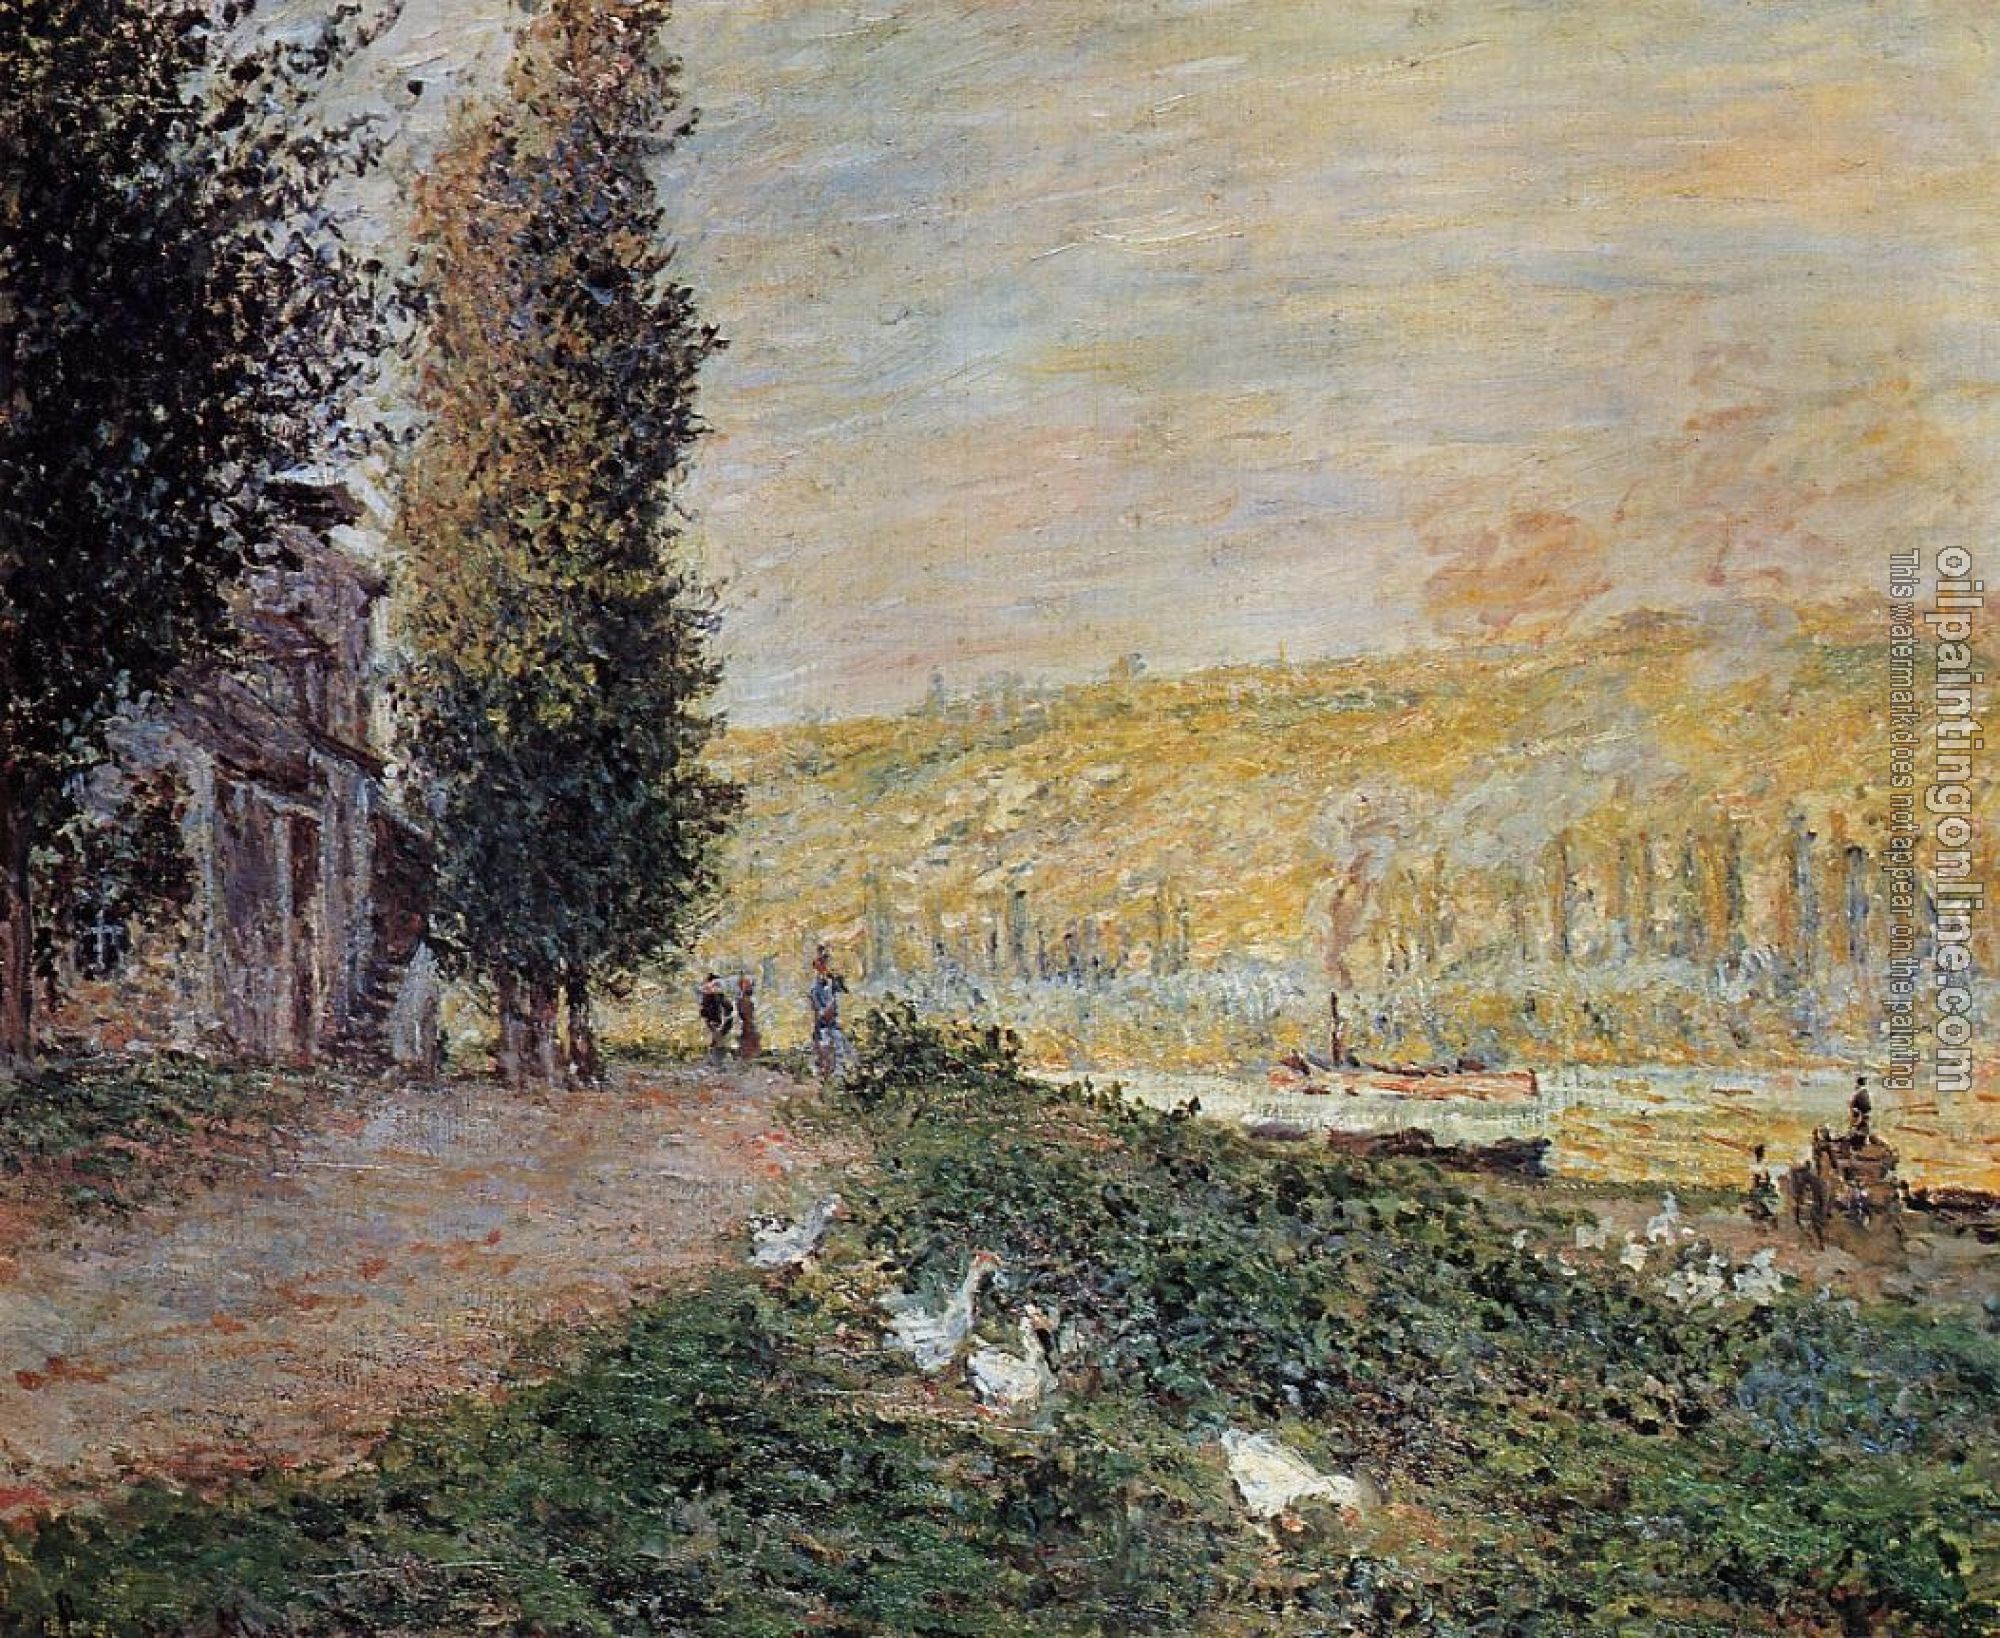 Monet, Claude Oscar - The Banks of the Seine, Lavacour